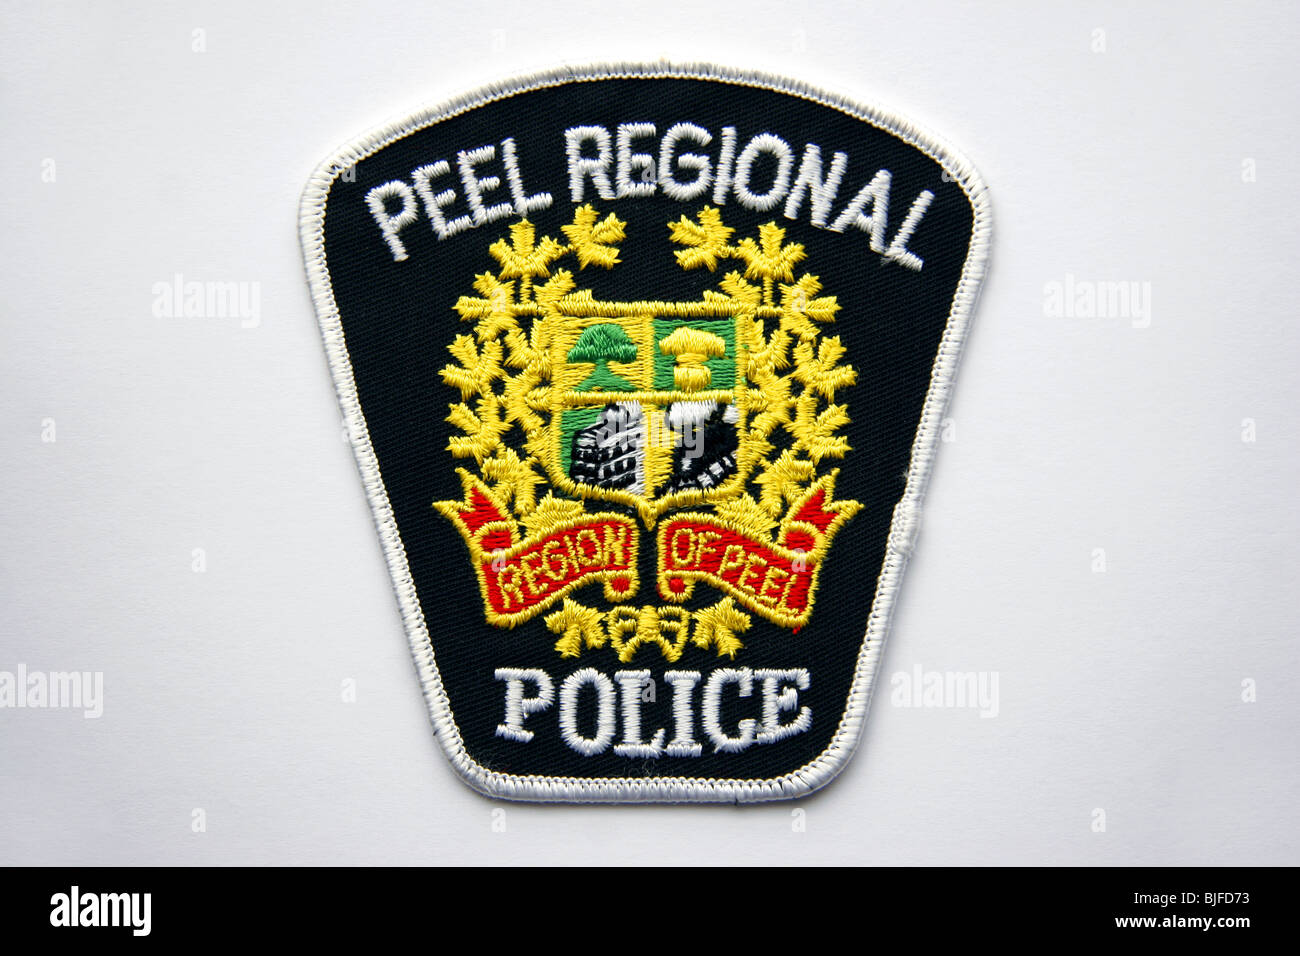 Patch von der Peel Regional Police Department, Ontario, Kanada. Stockfoto